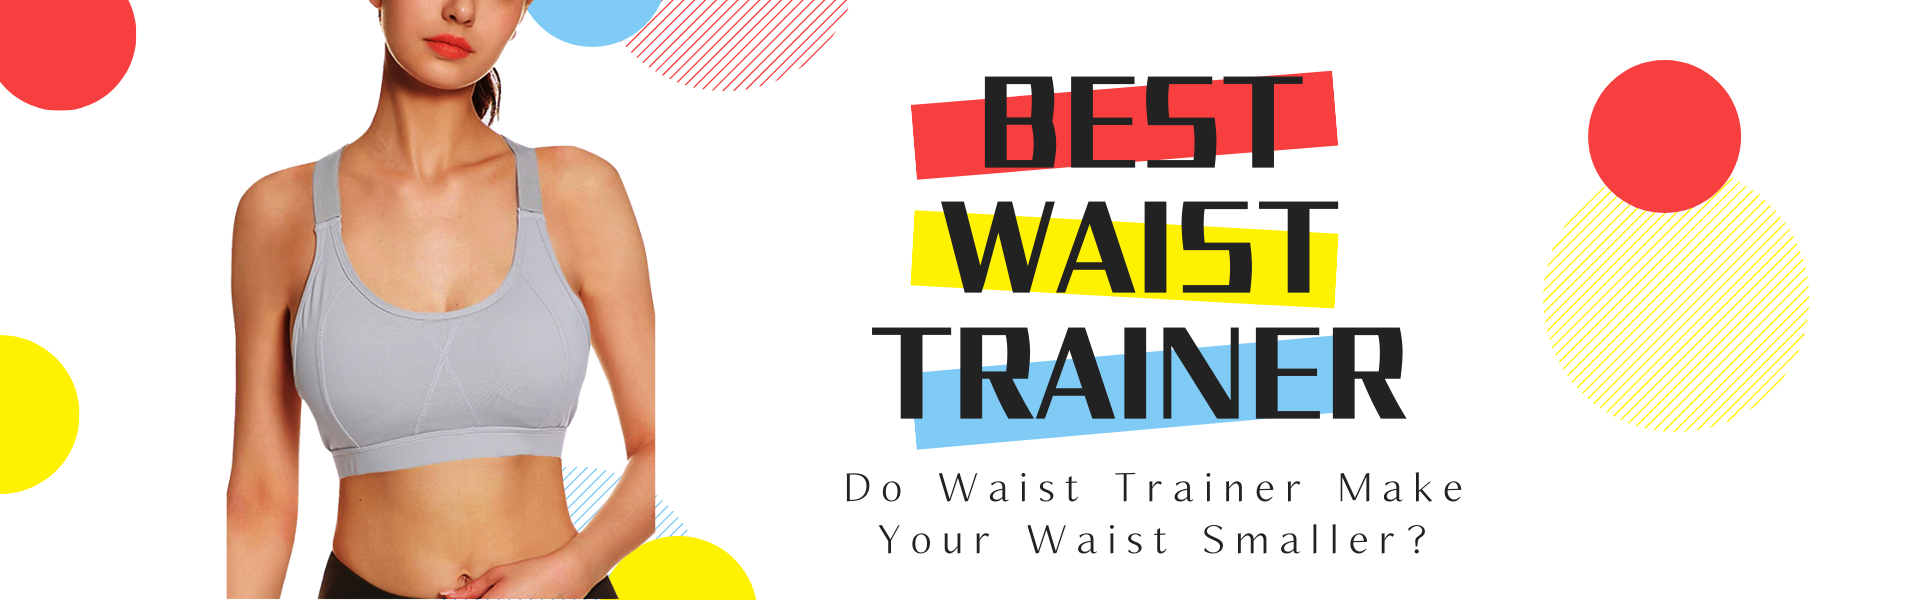 Do Waist Trainer Make Your Waist Smaller?